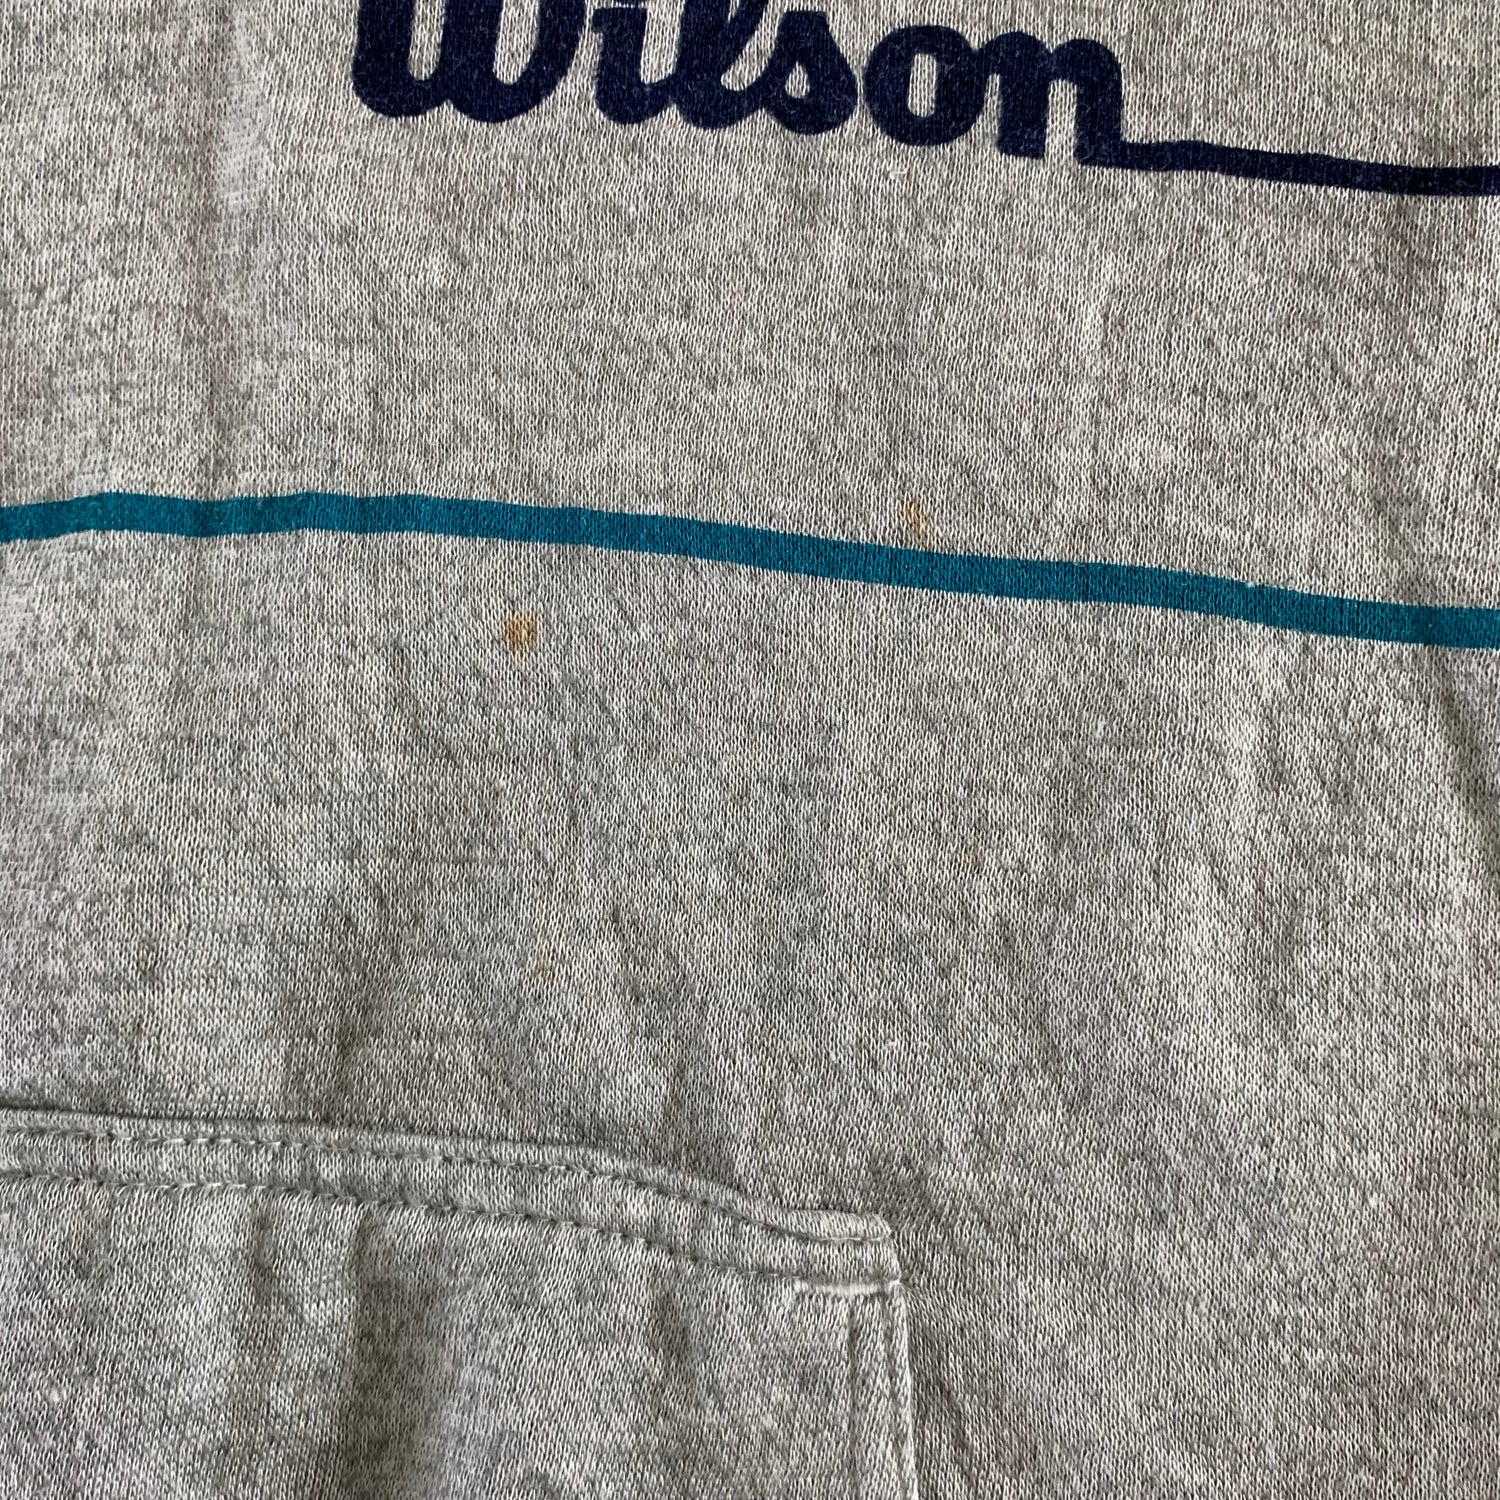 Vintage 1980s Wilson Hooded Sweatshirt size XL